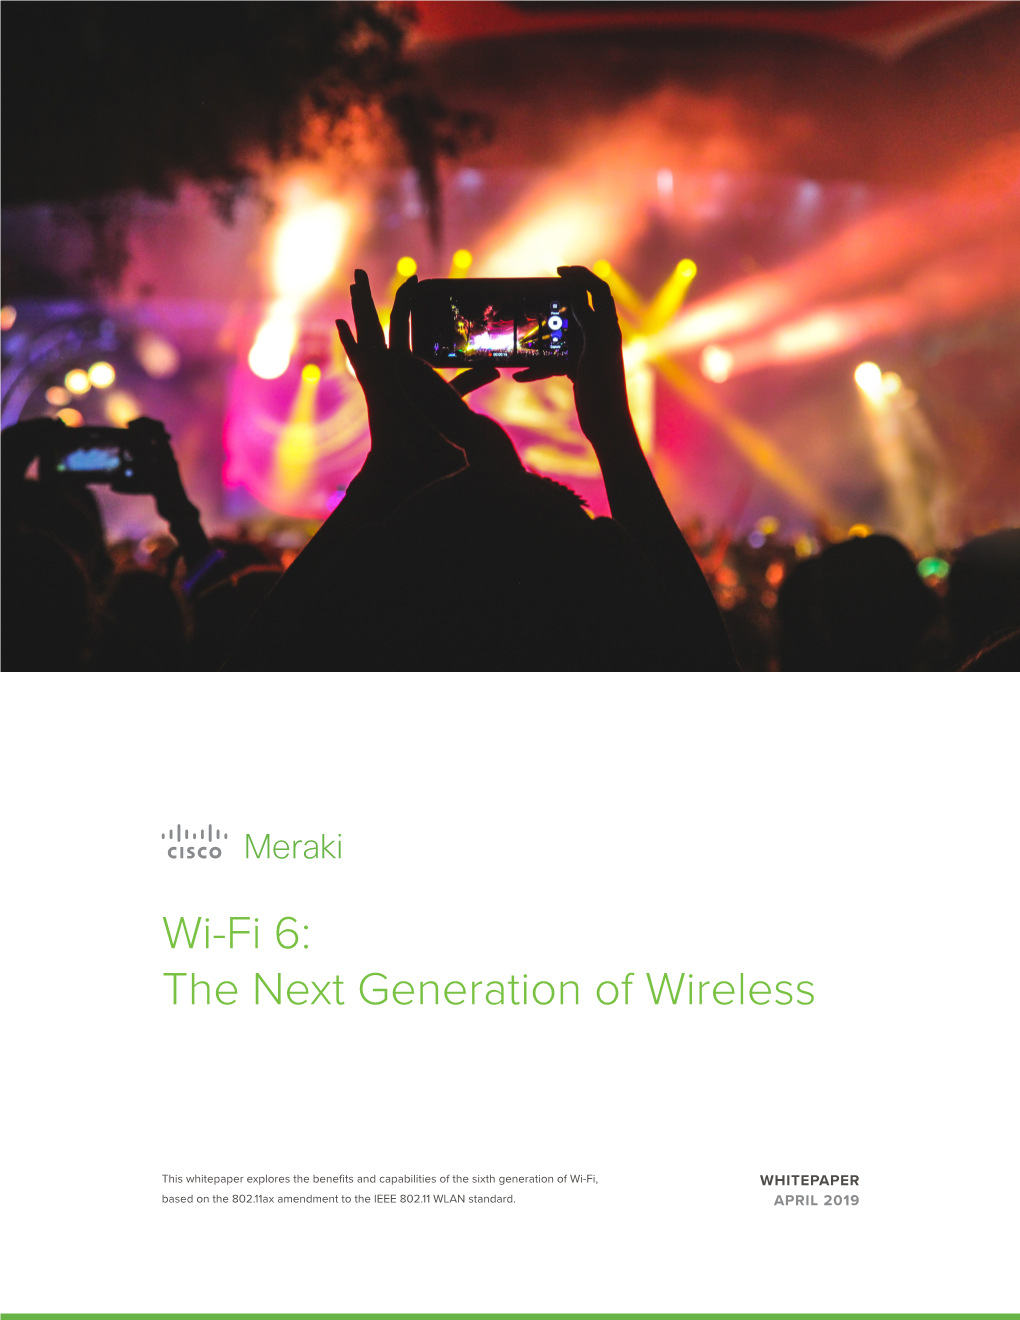 Wi-Fi 6: the Next Generation of Wireless